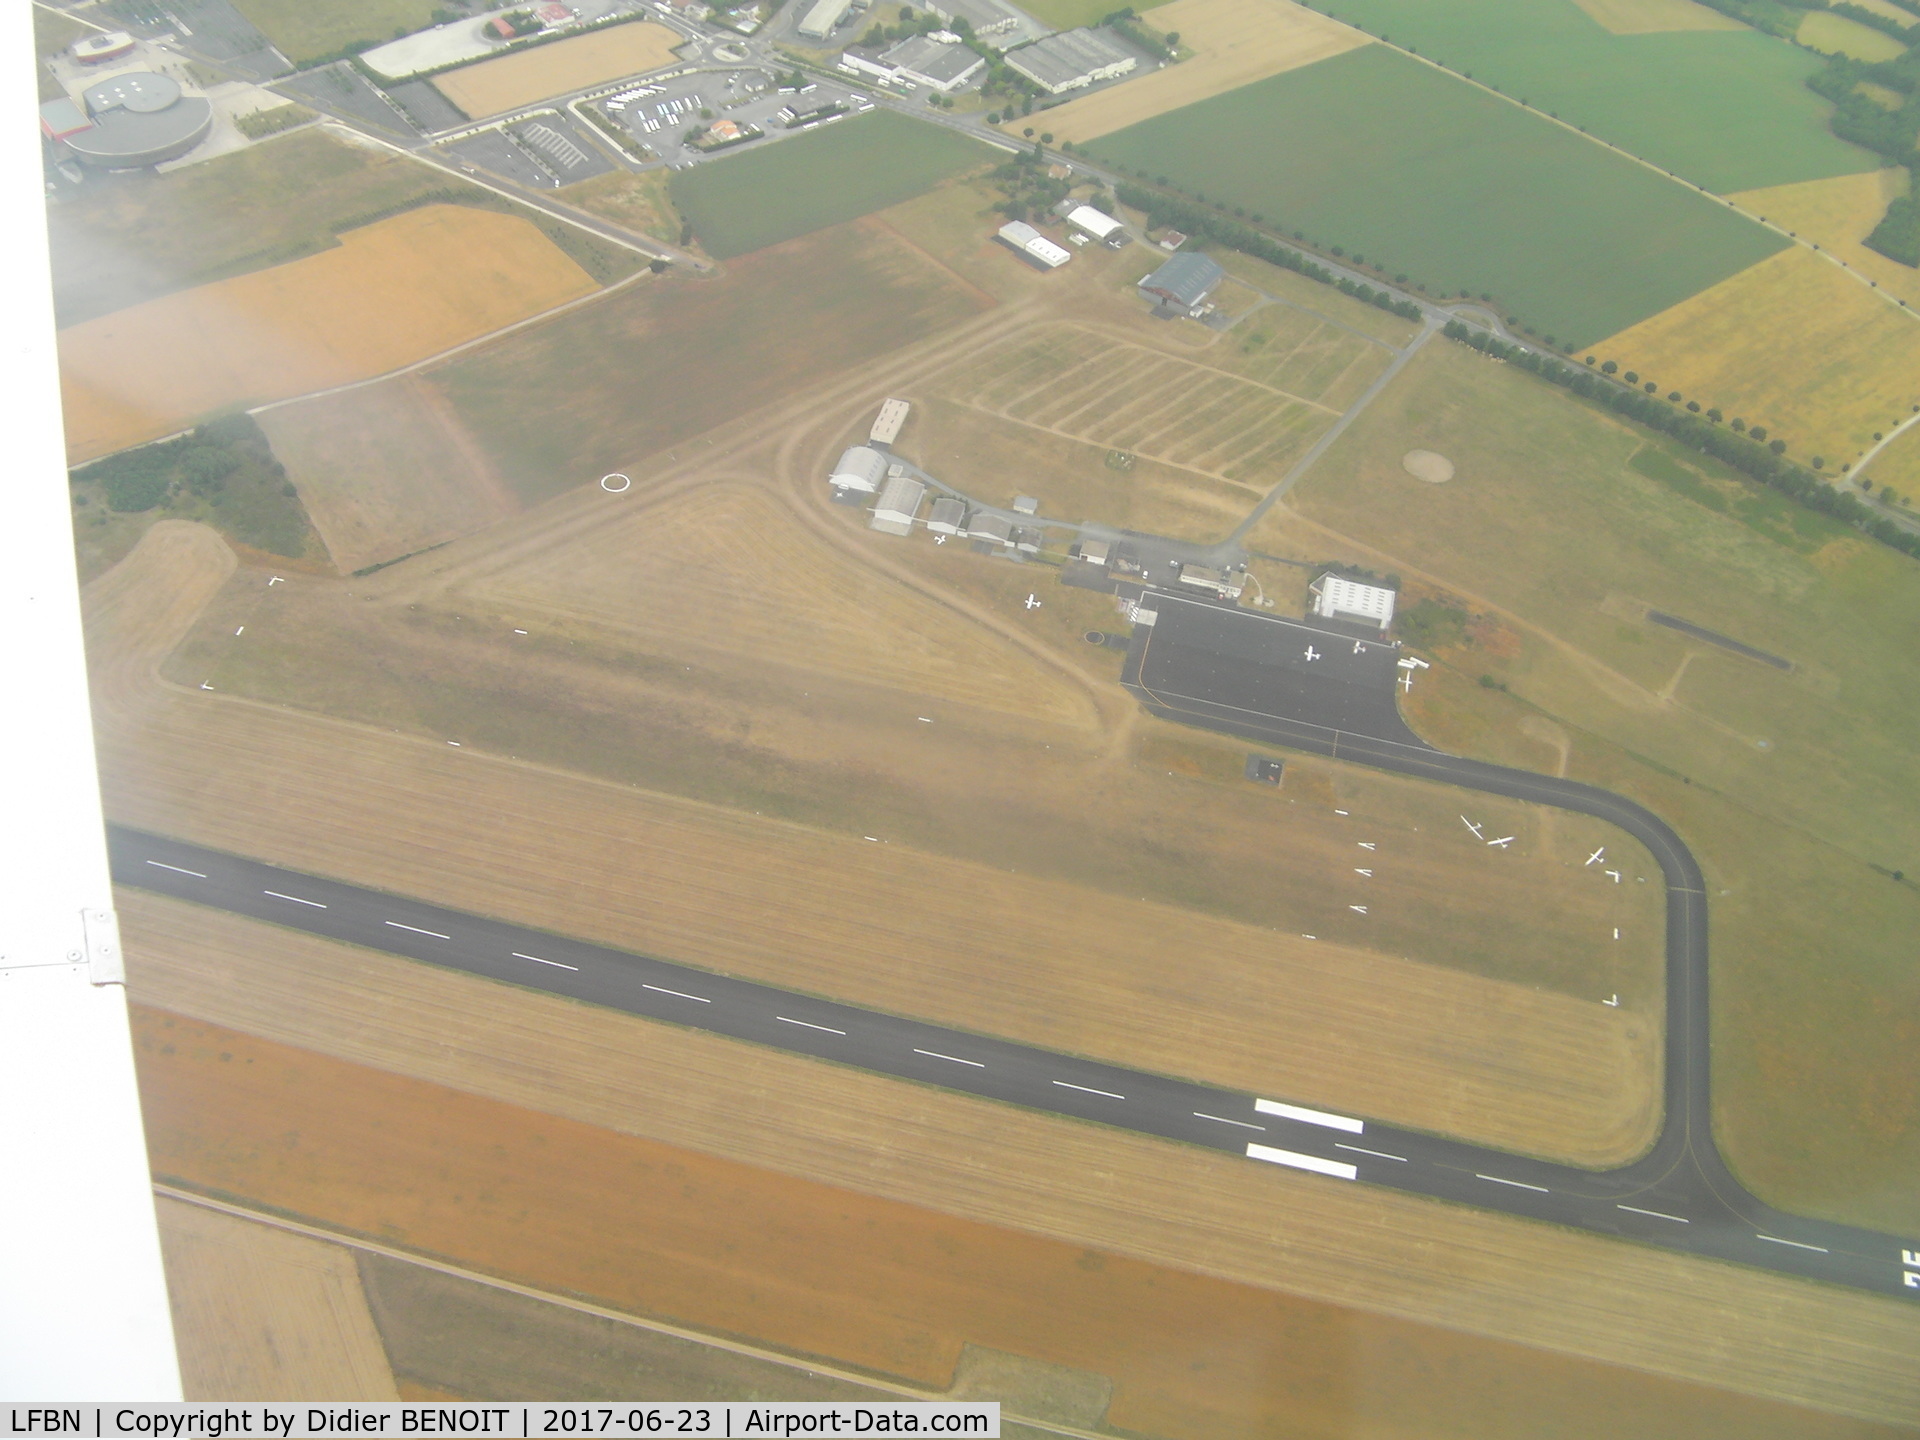 Niort Airport, Souche Airport France (LFBN) - Niort